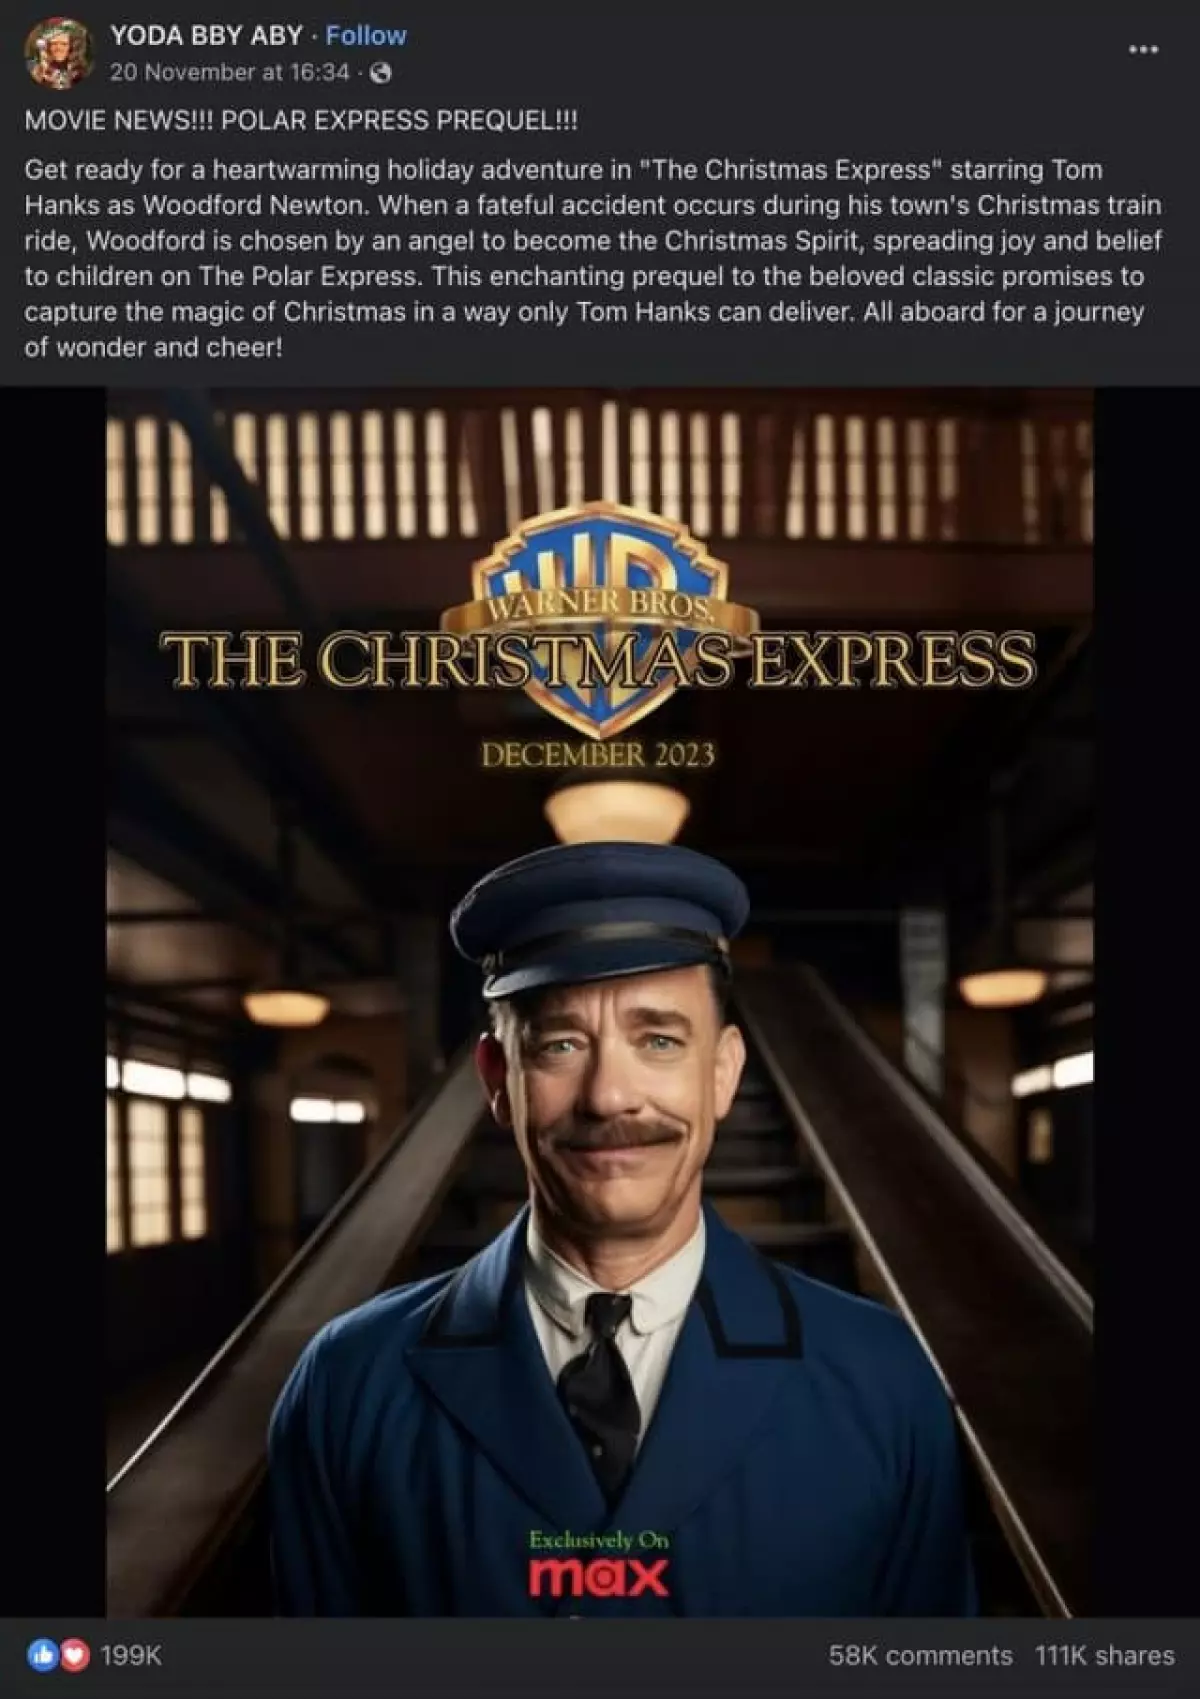 The fake poster for Polar Express sequel The Christmas Express